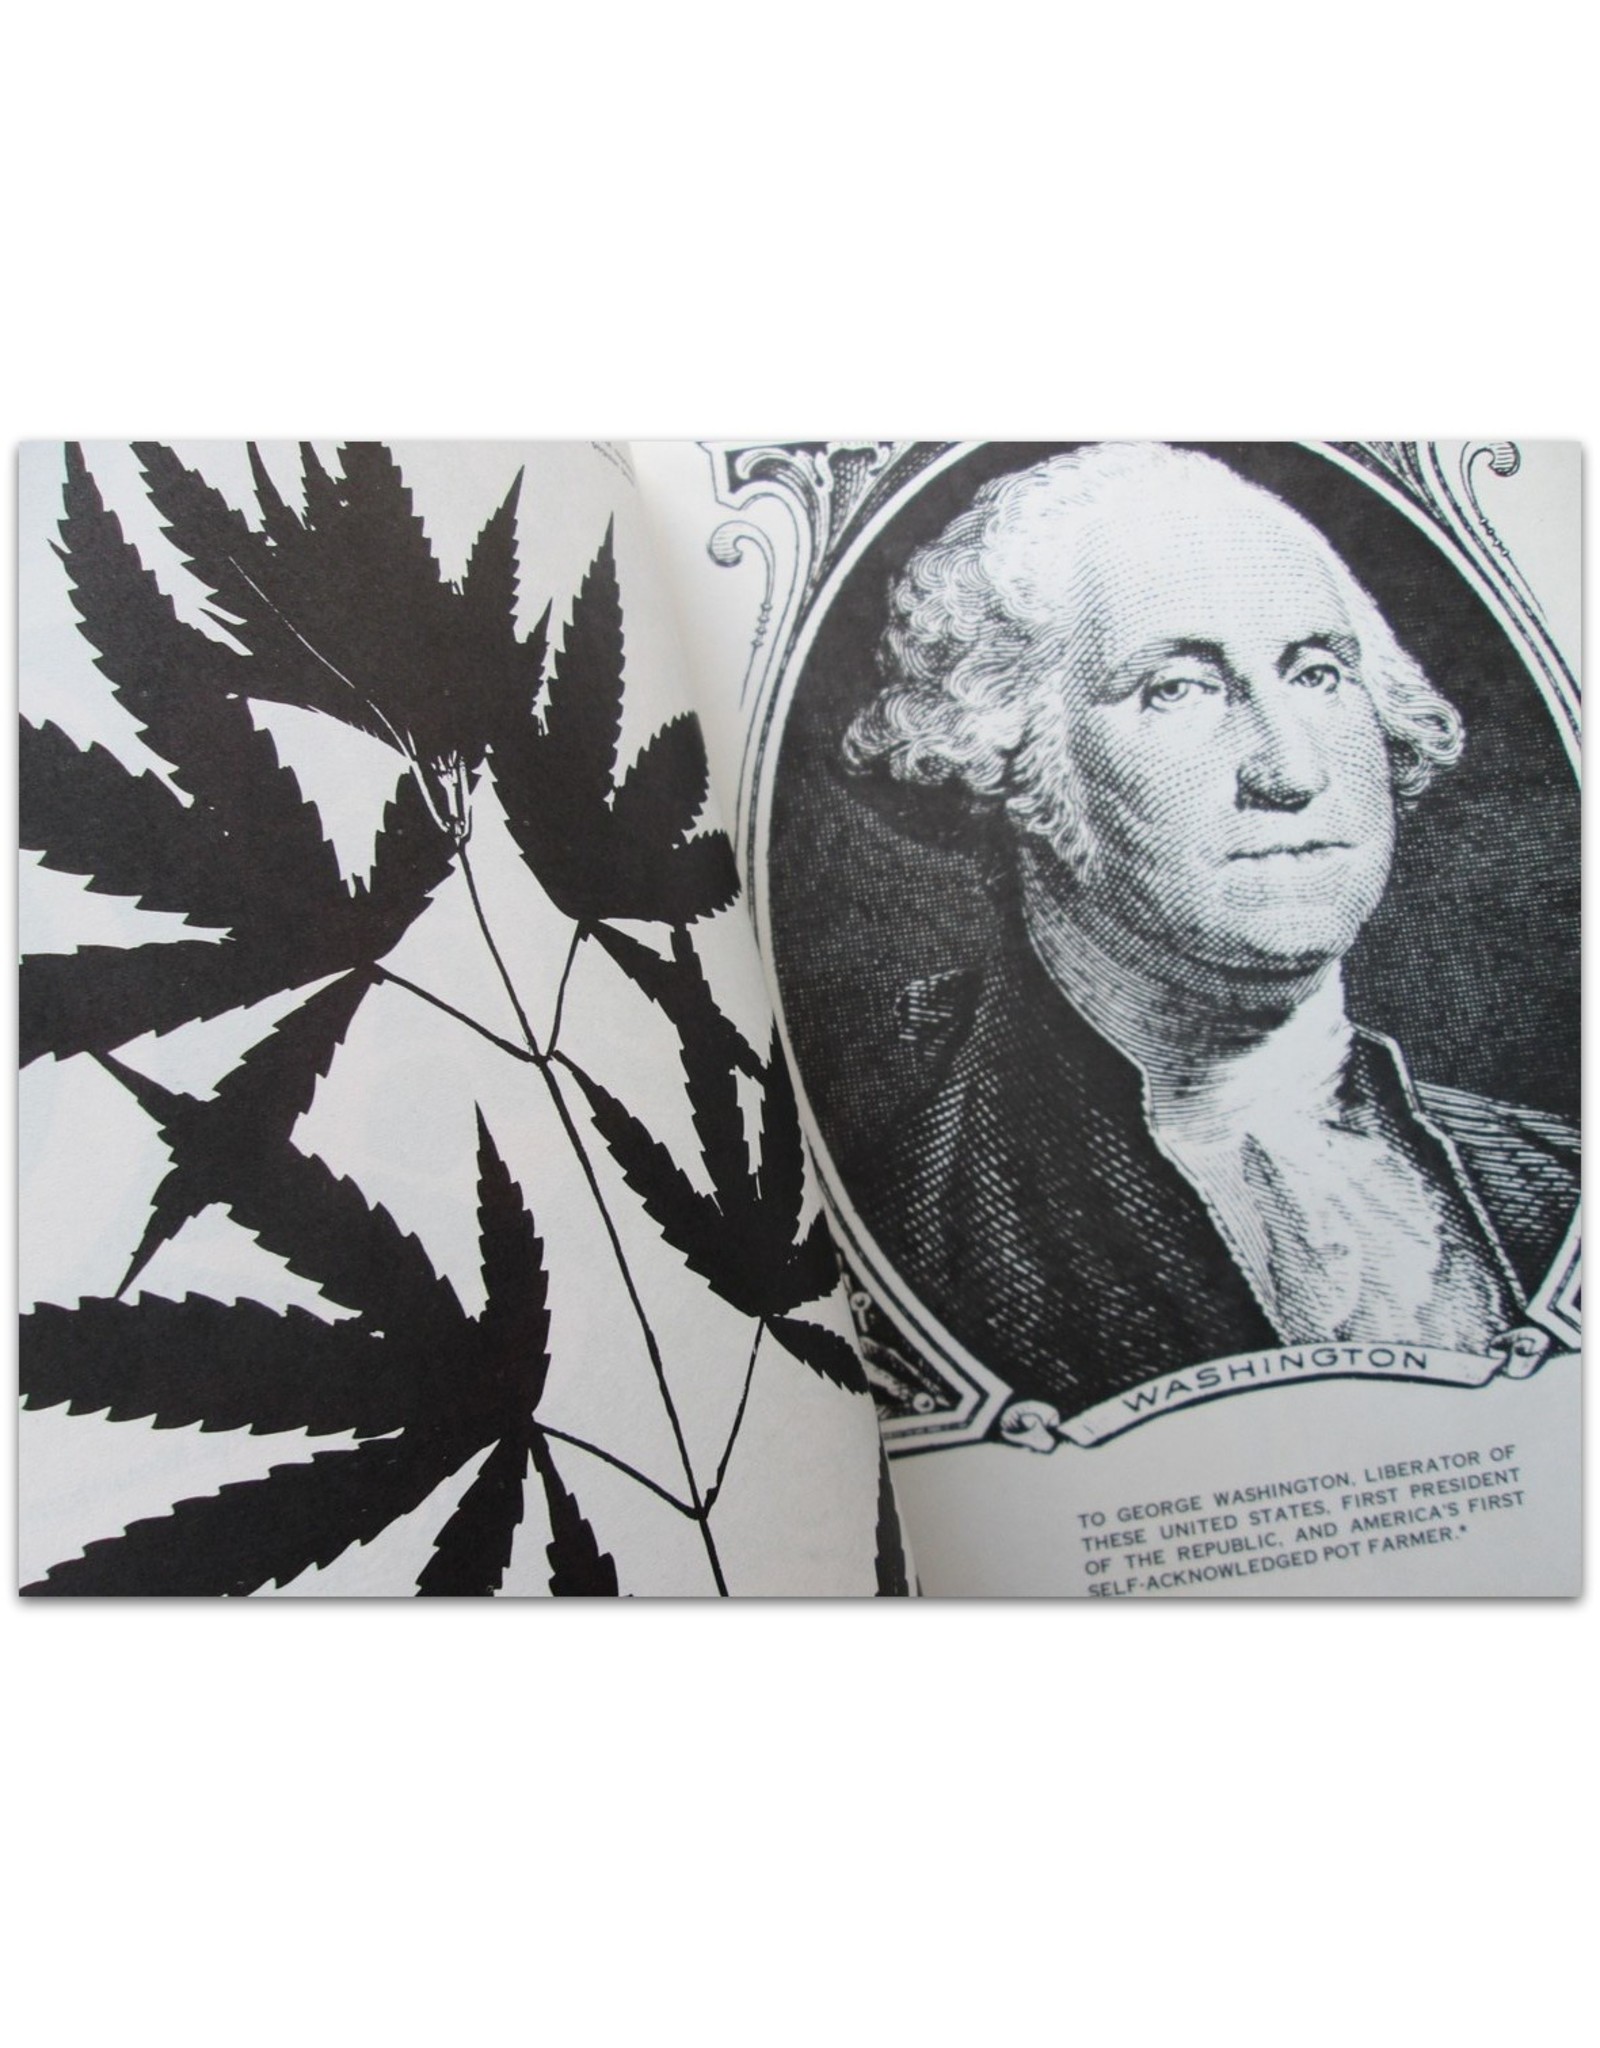 Pot Art for Pot Heads: Marijuana Reading Matter. An Anthology of reprints from the Popular Press